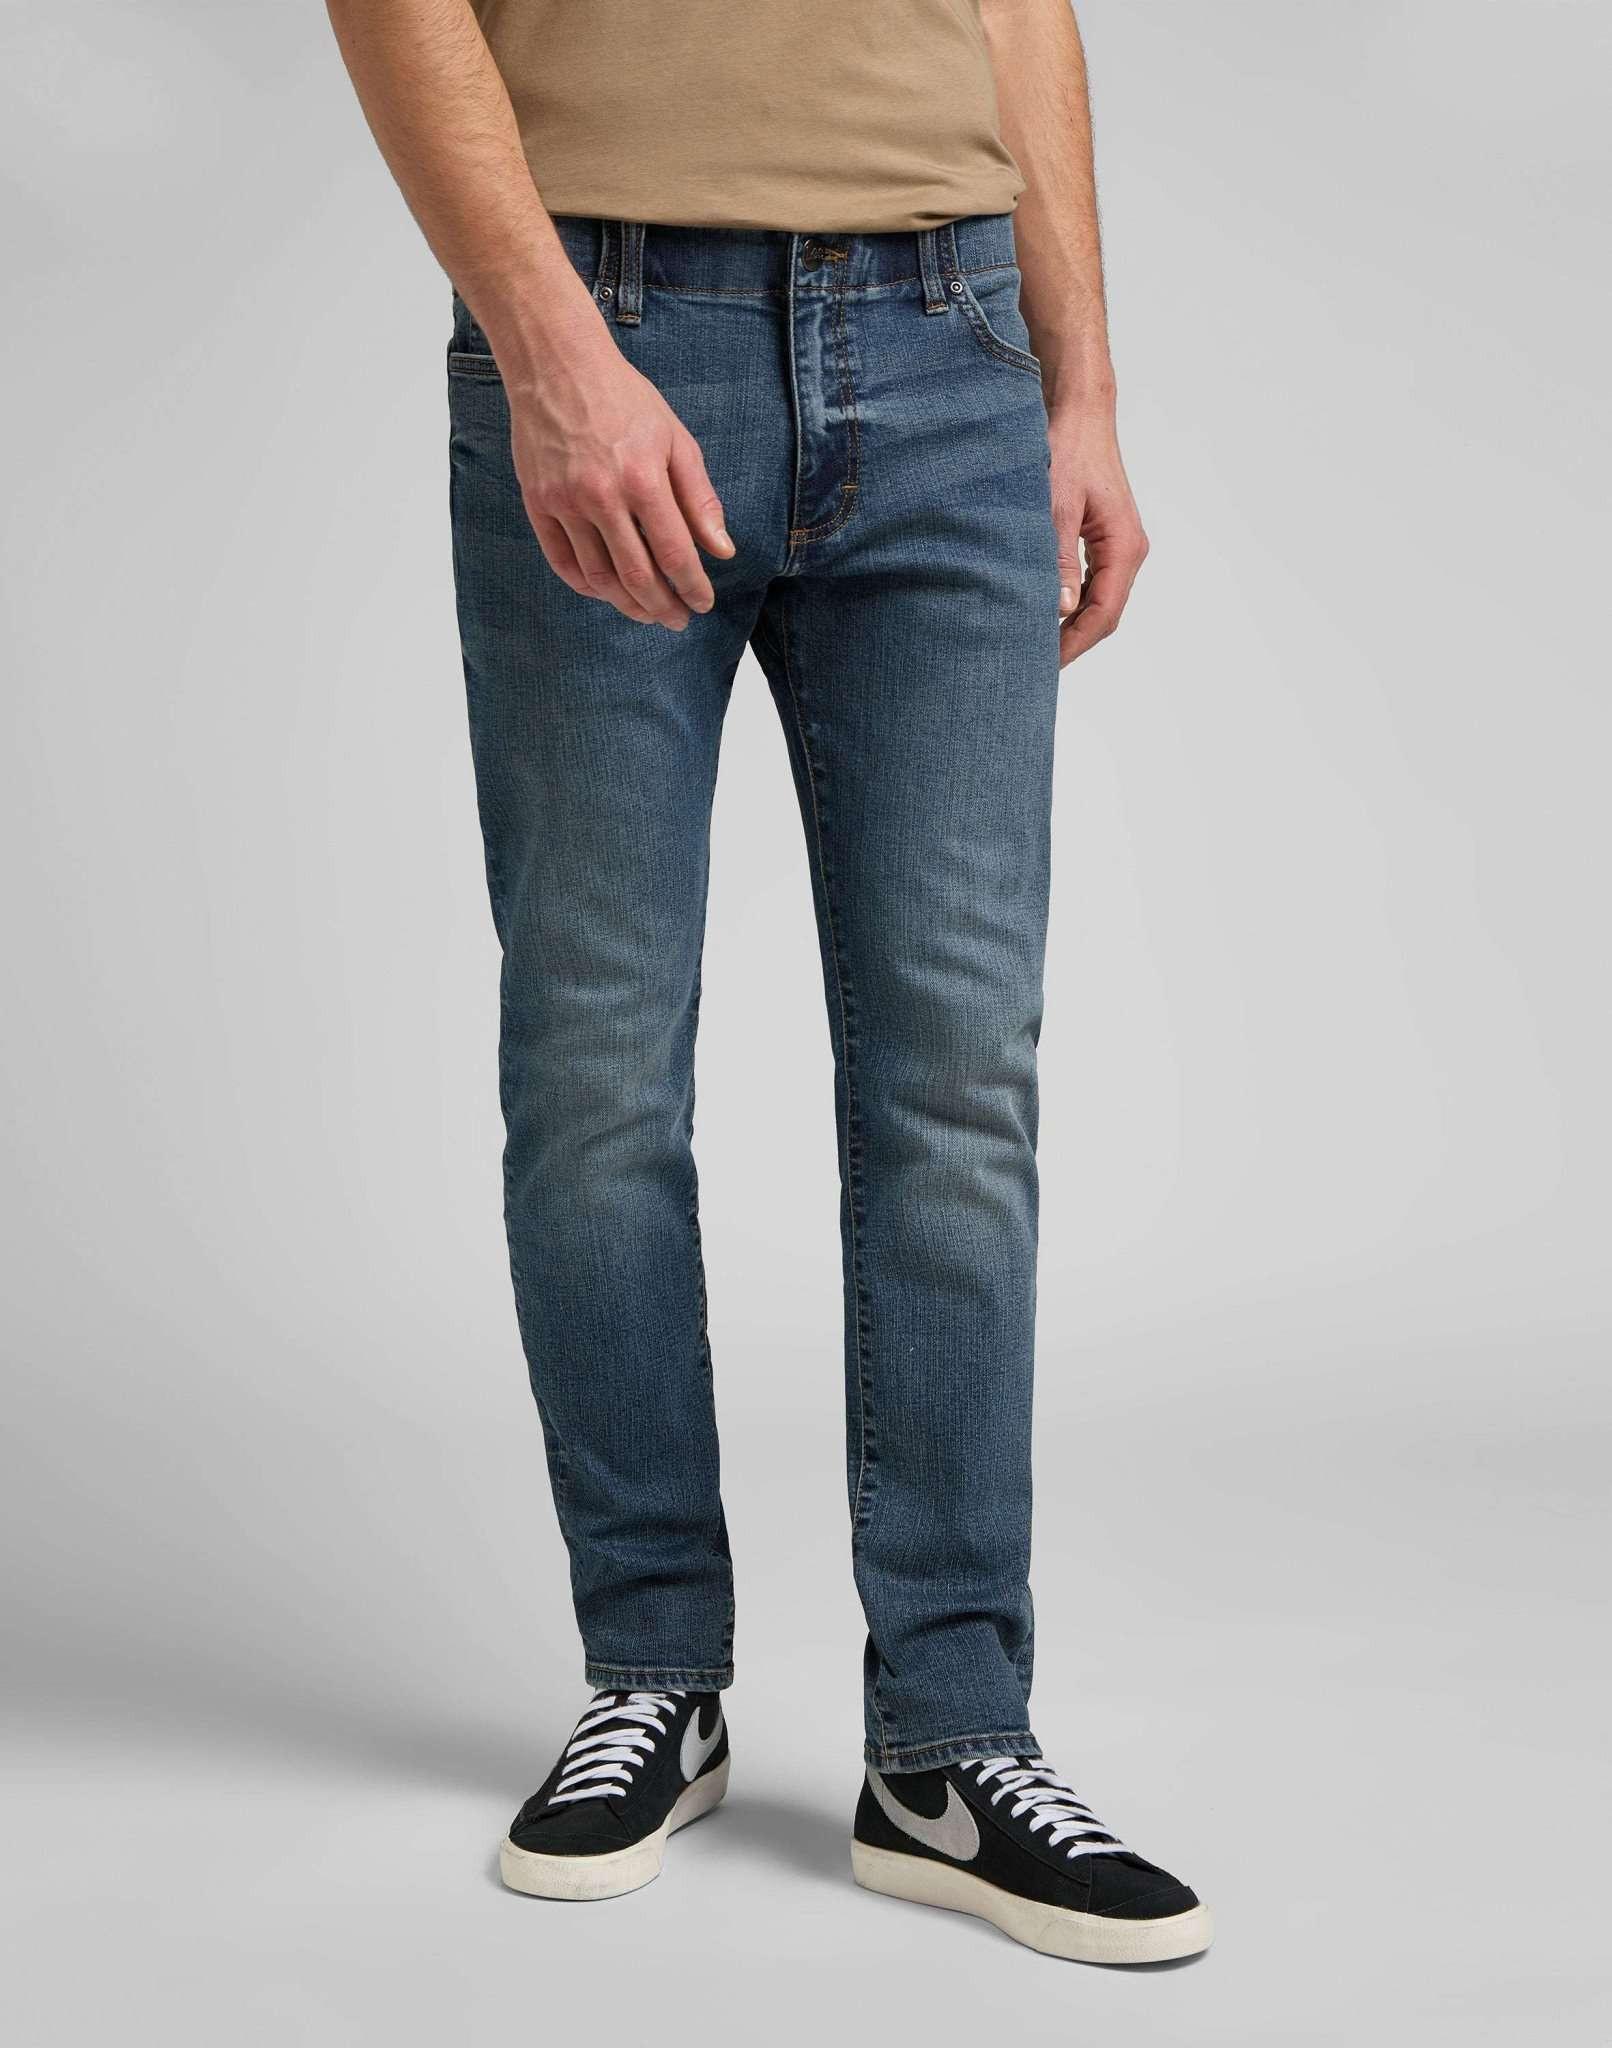 Jeans Skinny Fit Xm Herren Blau Denim L34/W38 von Lee